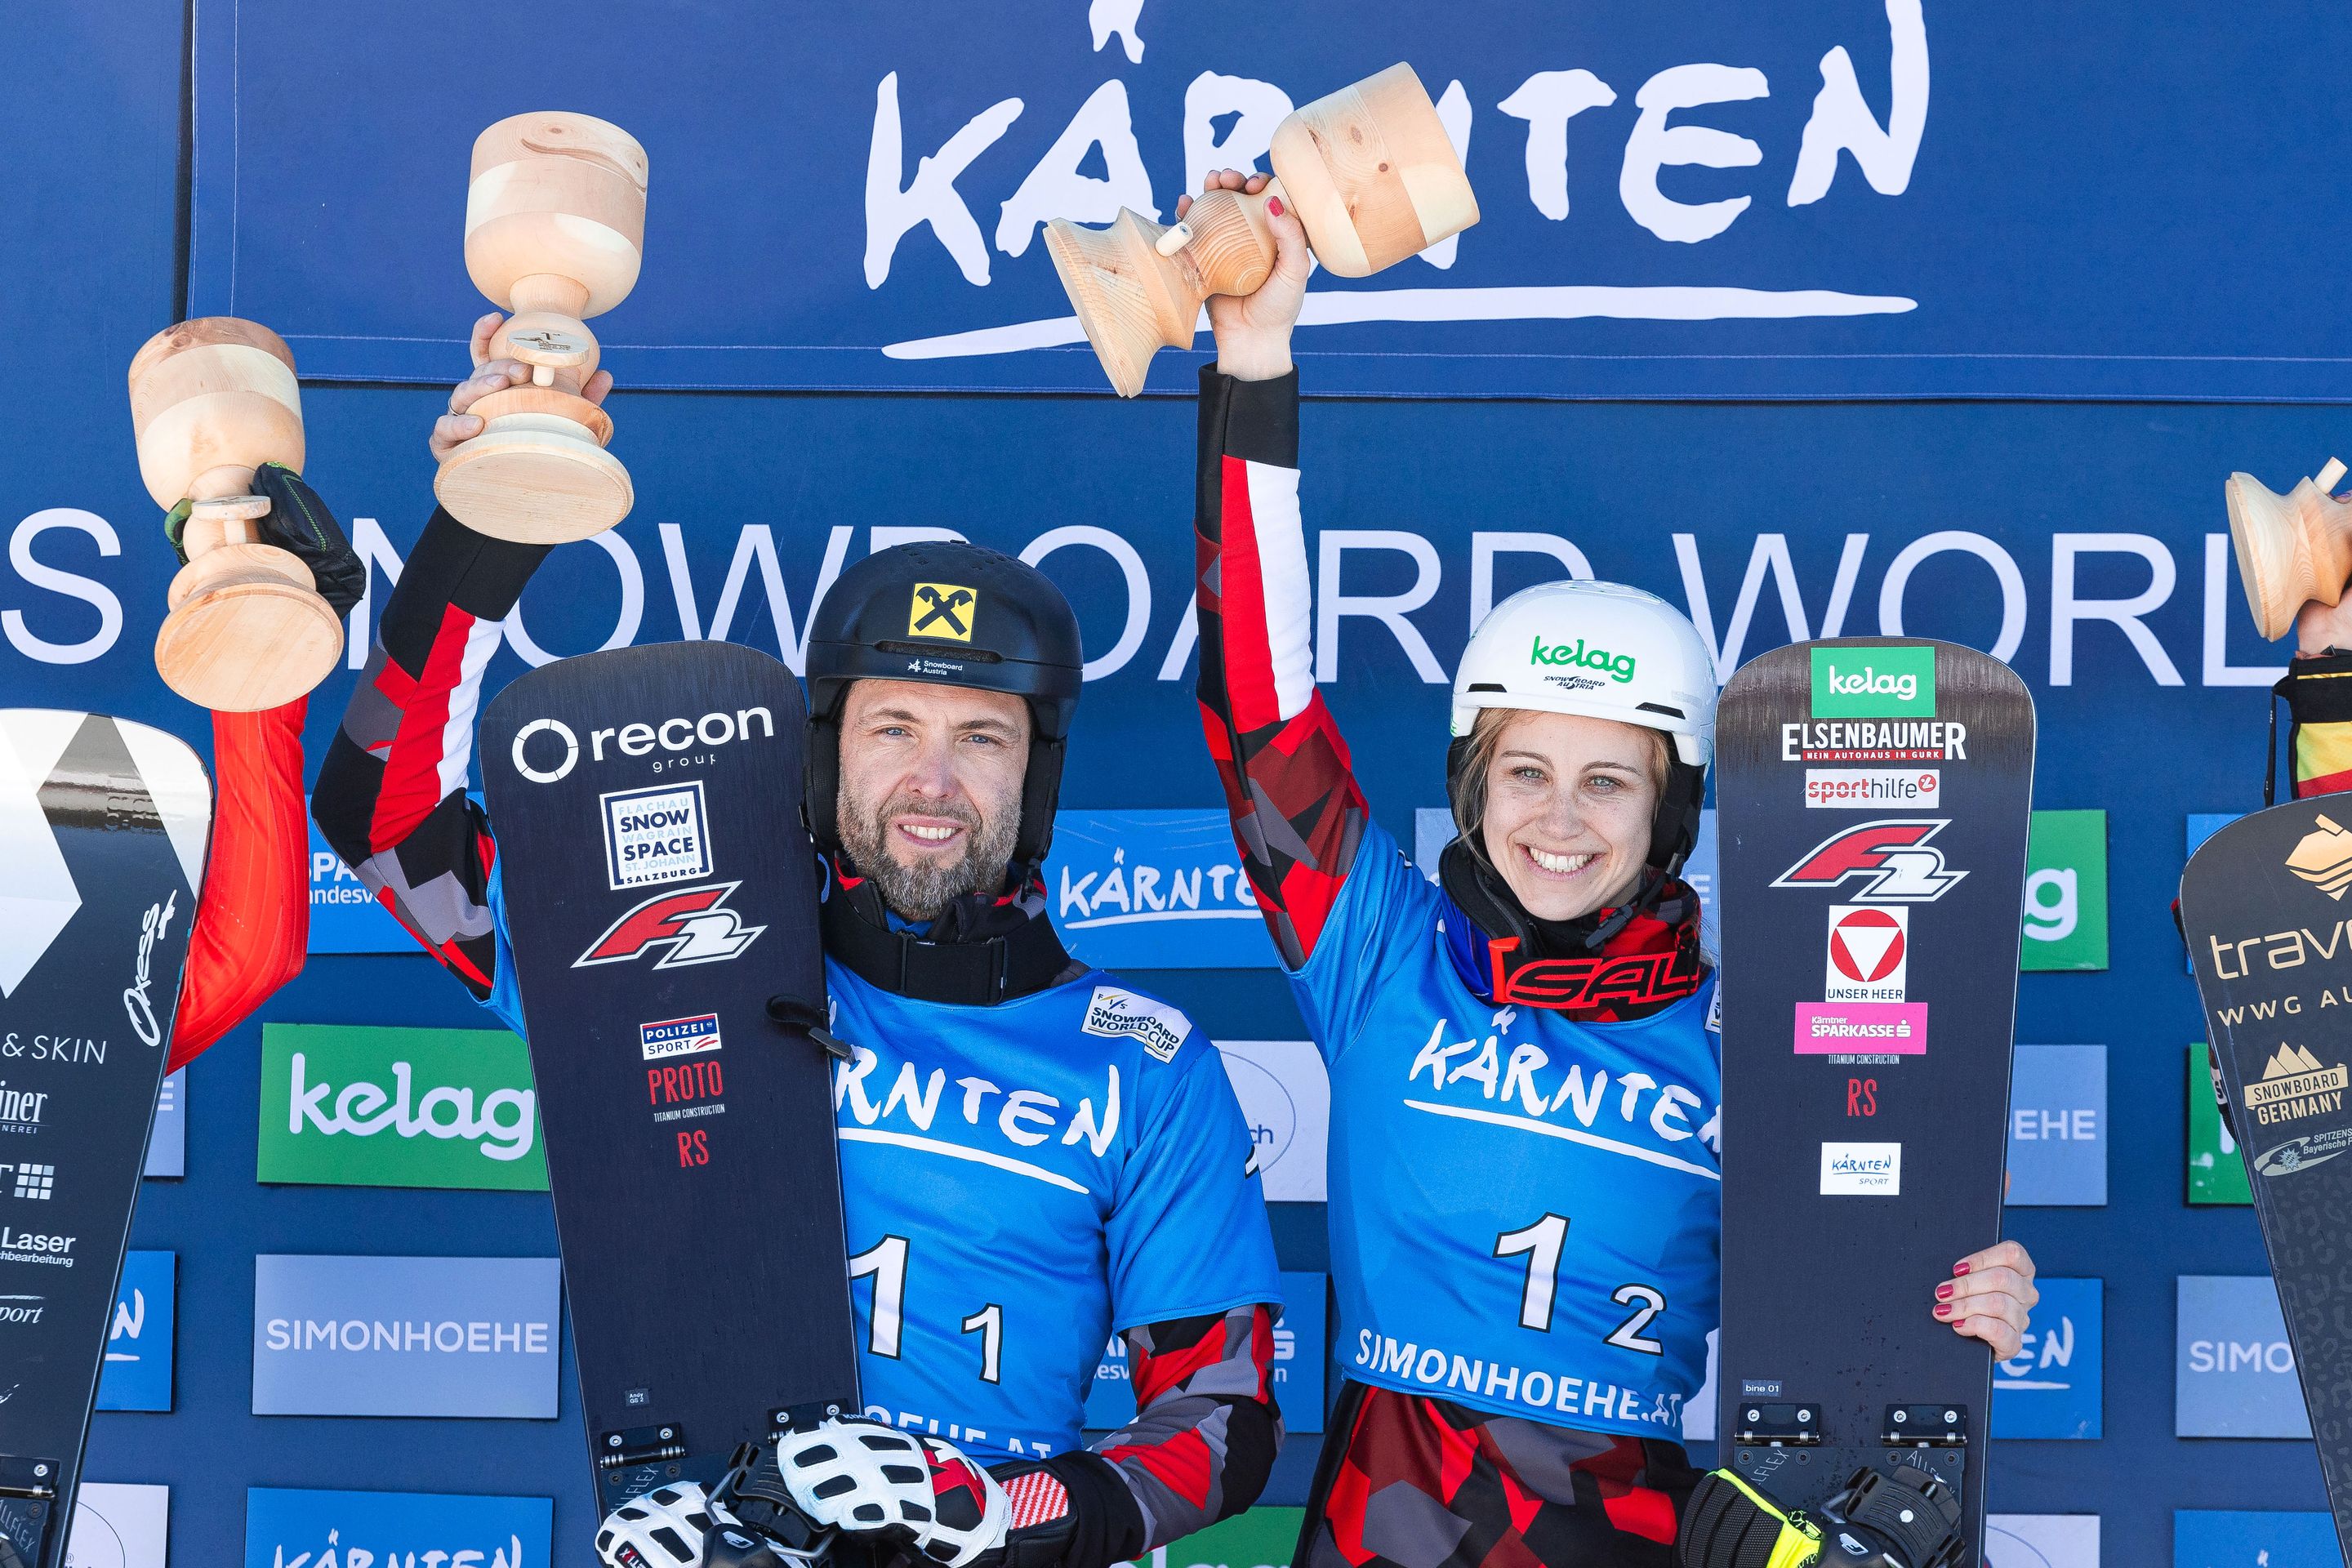 Sabine Schoeffmann (AUT) and Andreas Prommegger (AUT) lift the trophies in Austria. © Miha Matavz/FIS